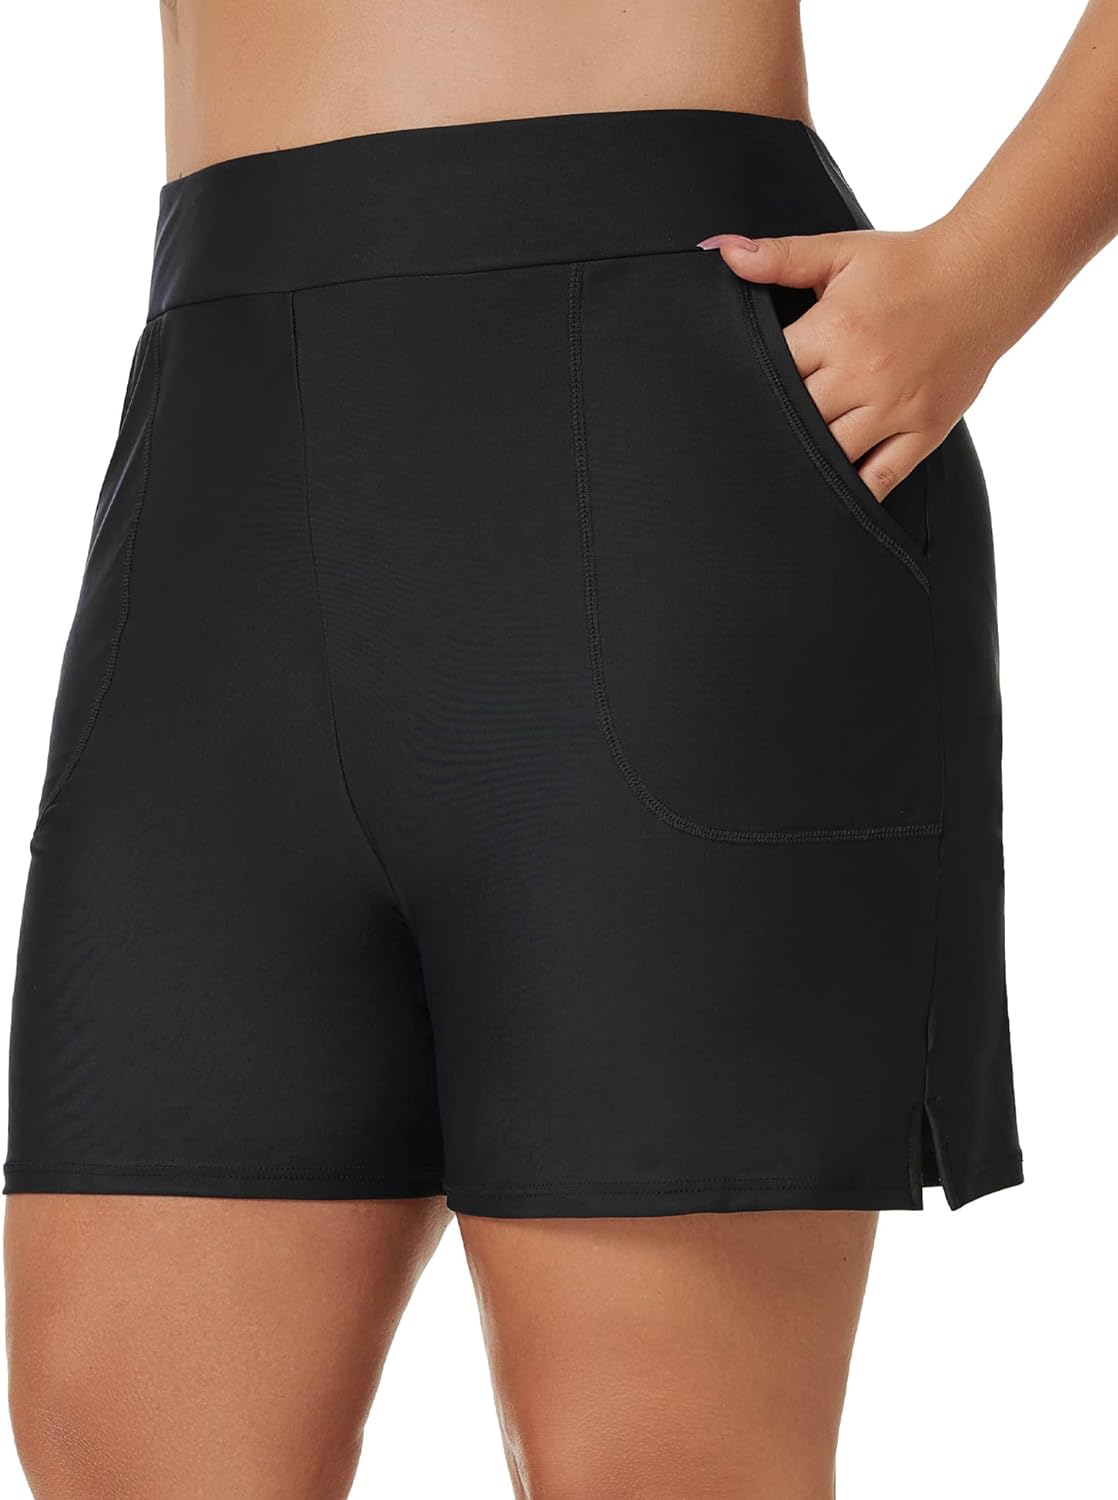 Tournesol Women’s 5”-7” Plus Size Swim Shorts: The Perfect Bathing Suit Bottoms